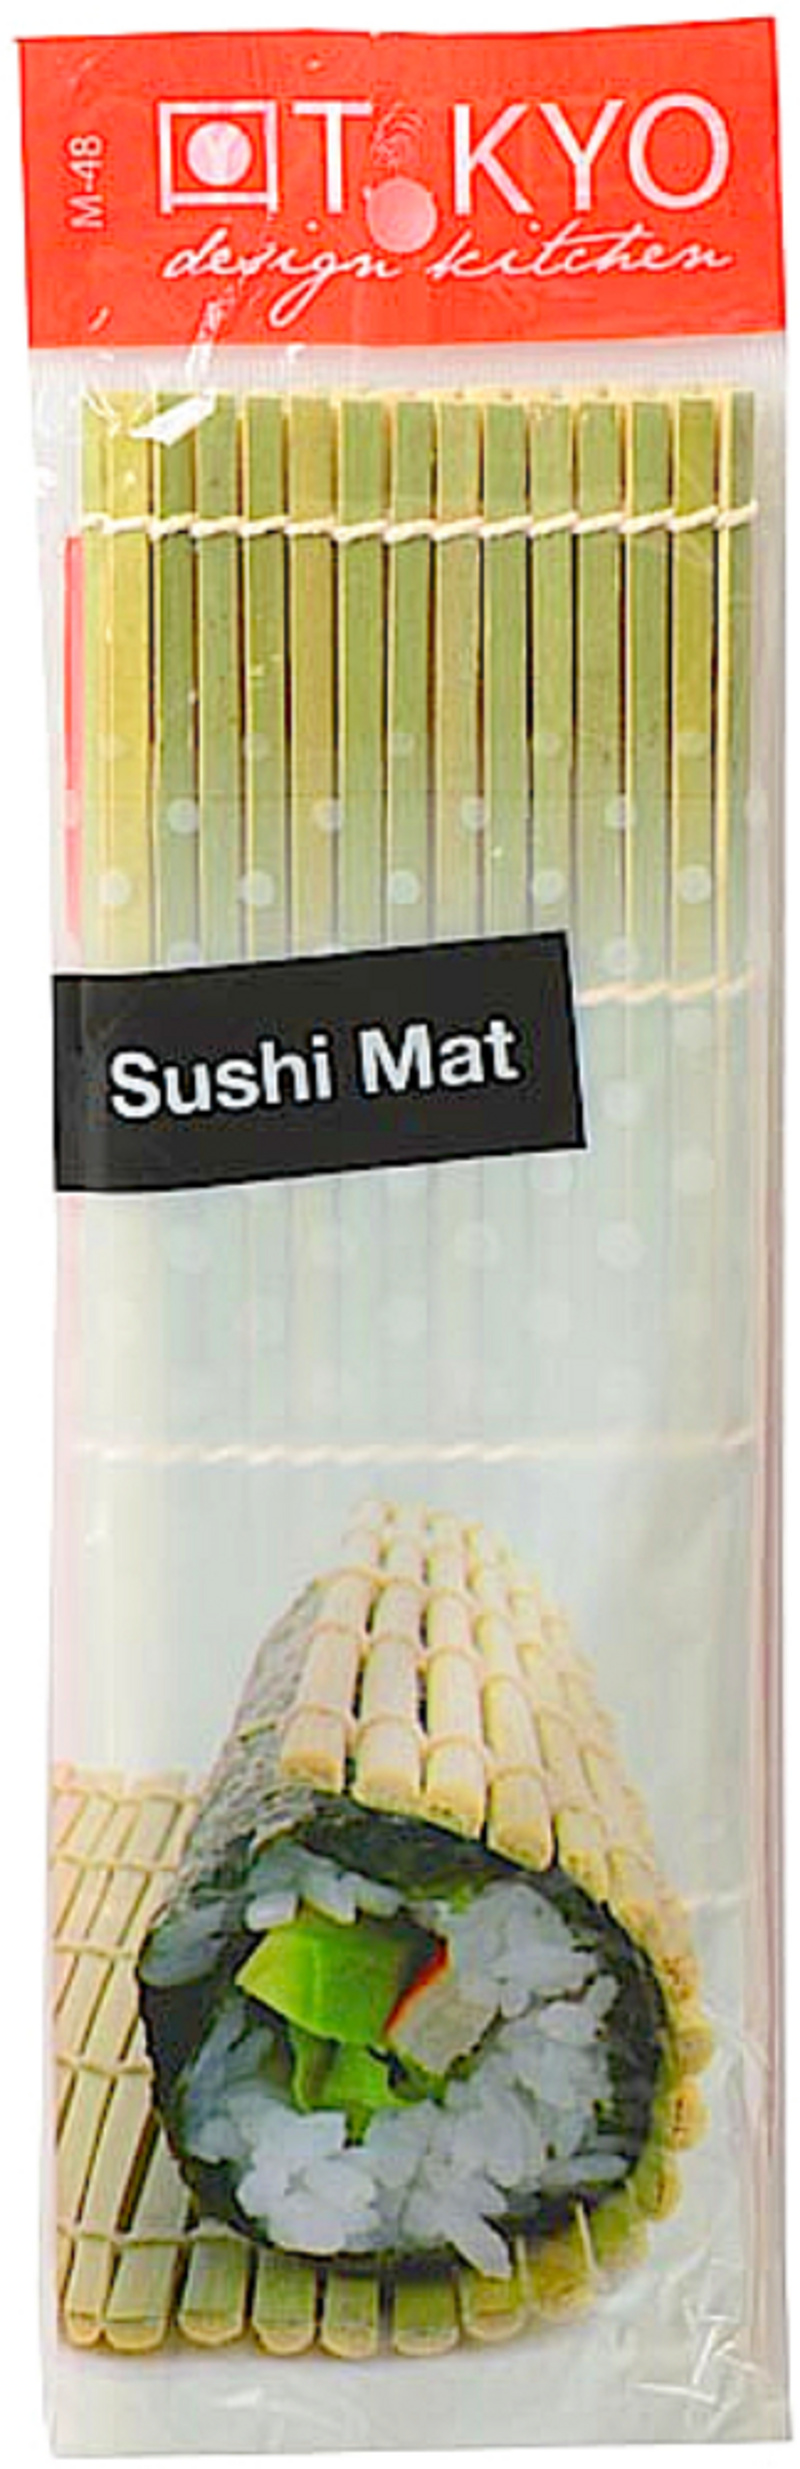 Bambus Sushi Matte - 24 x 24cm von Tokyo Design Studio